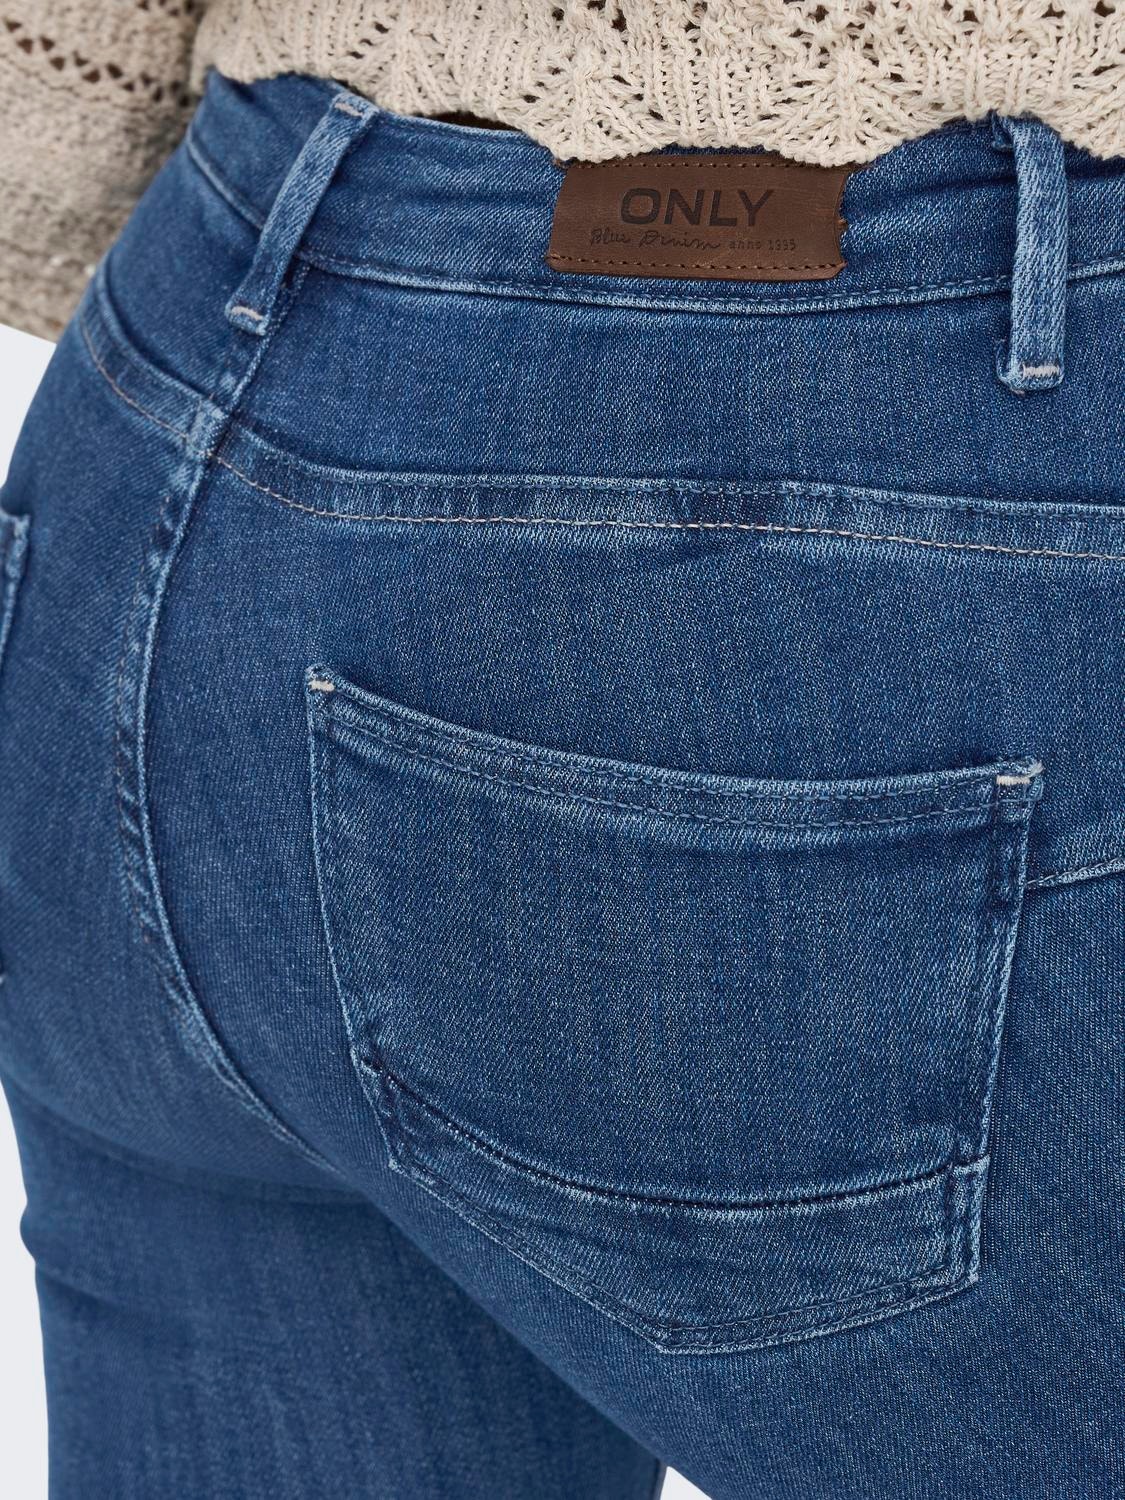 ONLPower push up Skinny fit jeans, Medium Blue